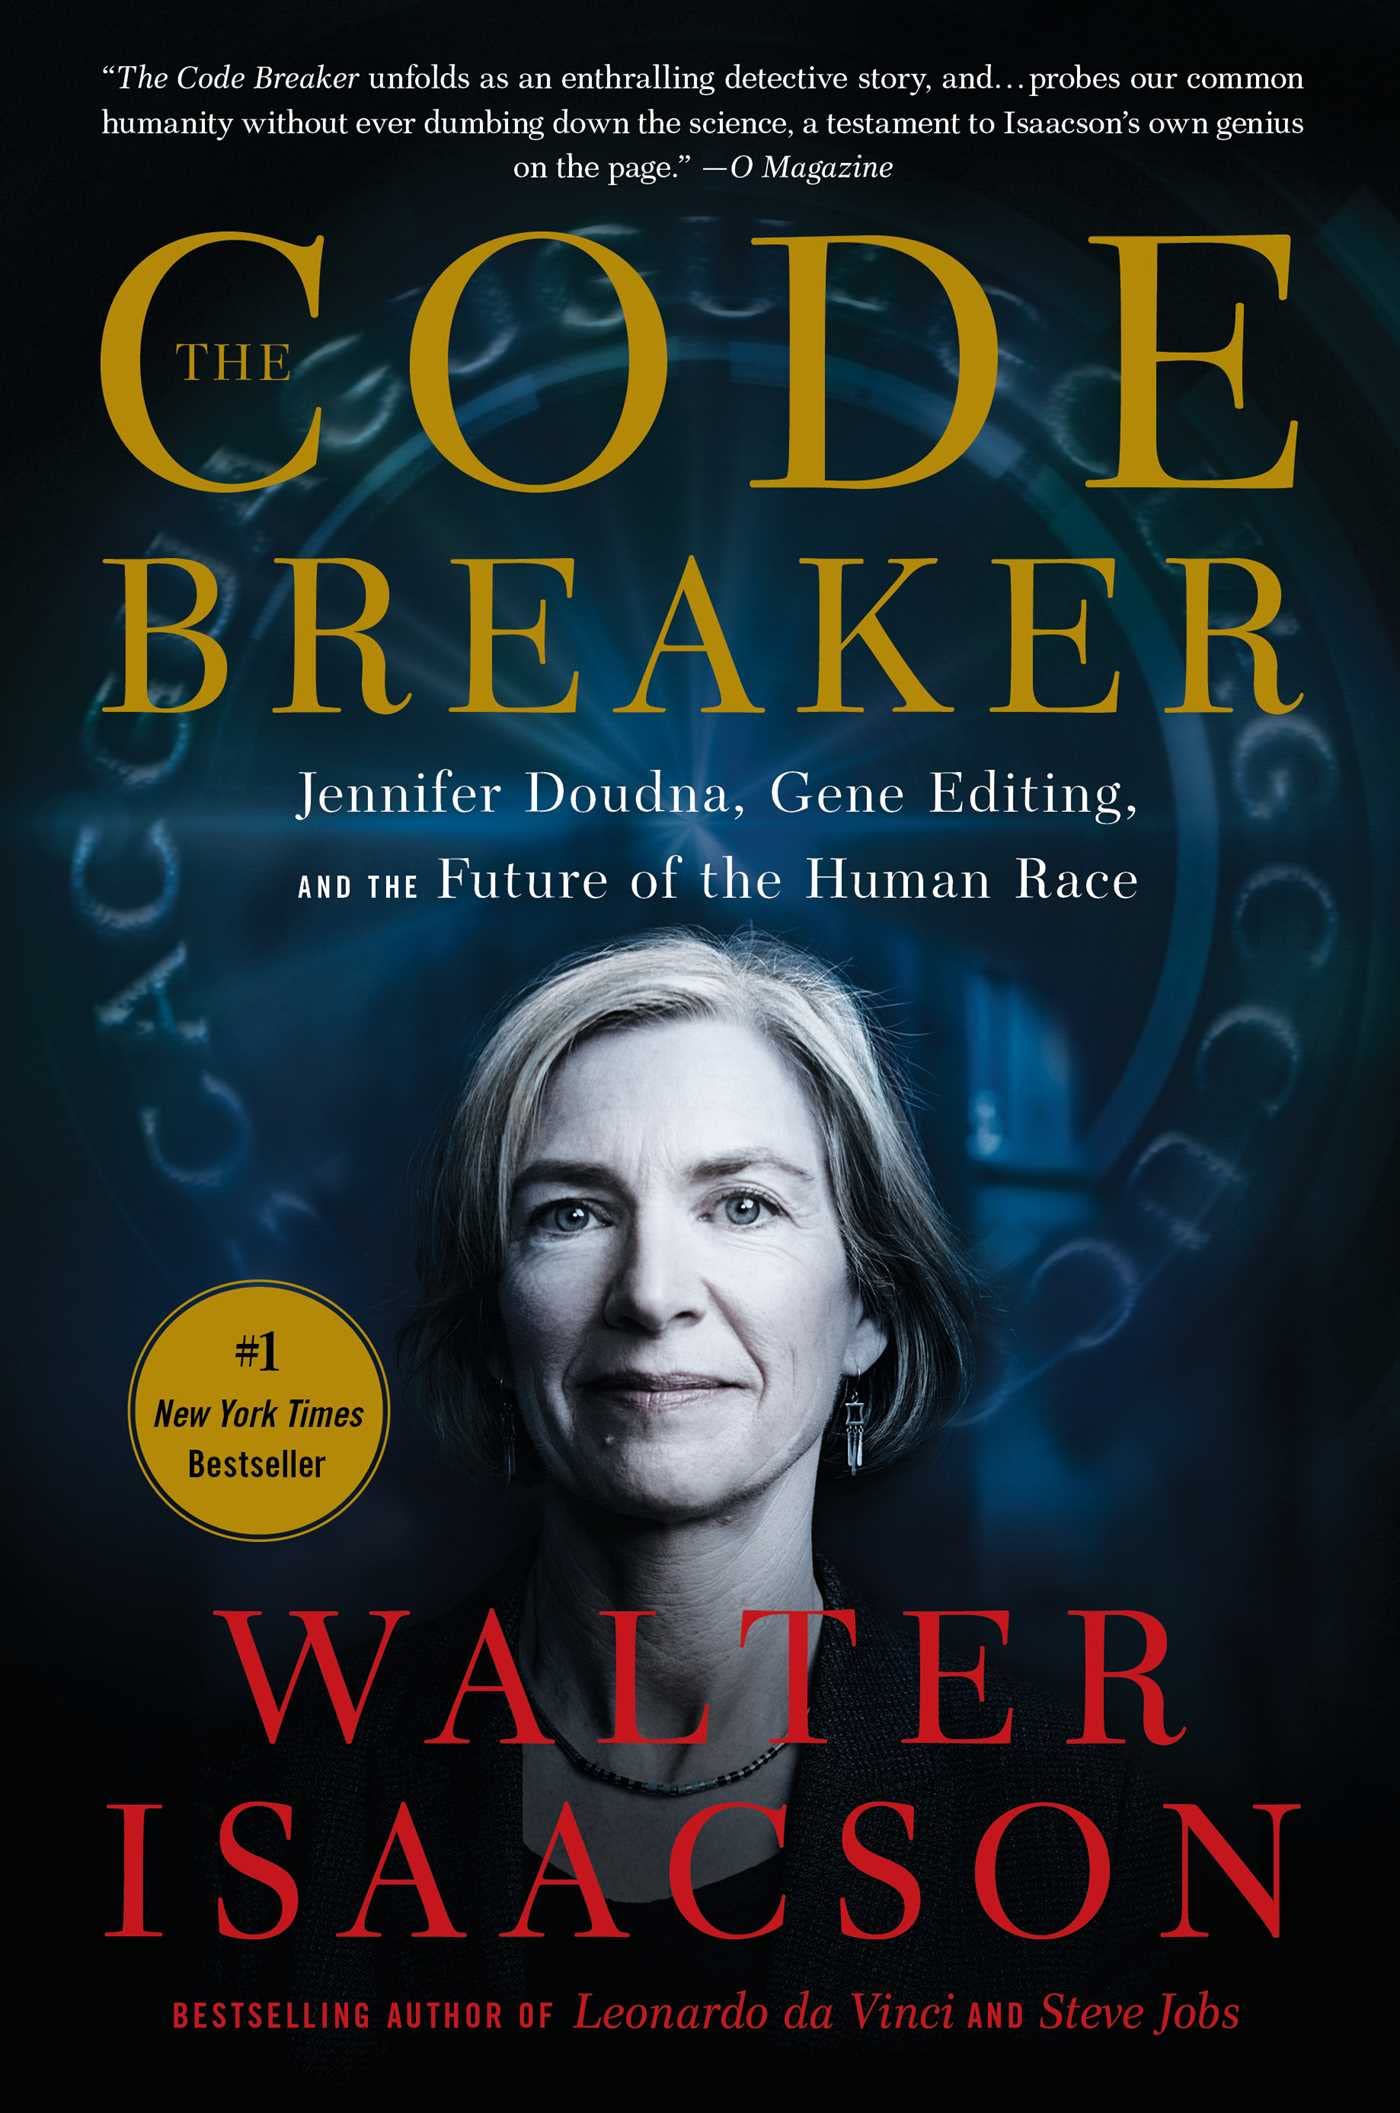 The Code Breaker: Jennifer Doudna Gene Editing And The Future Of The Human Race